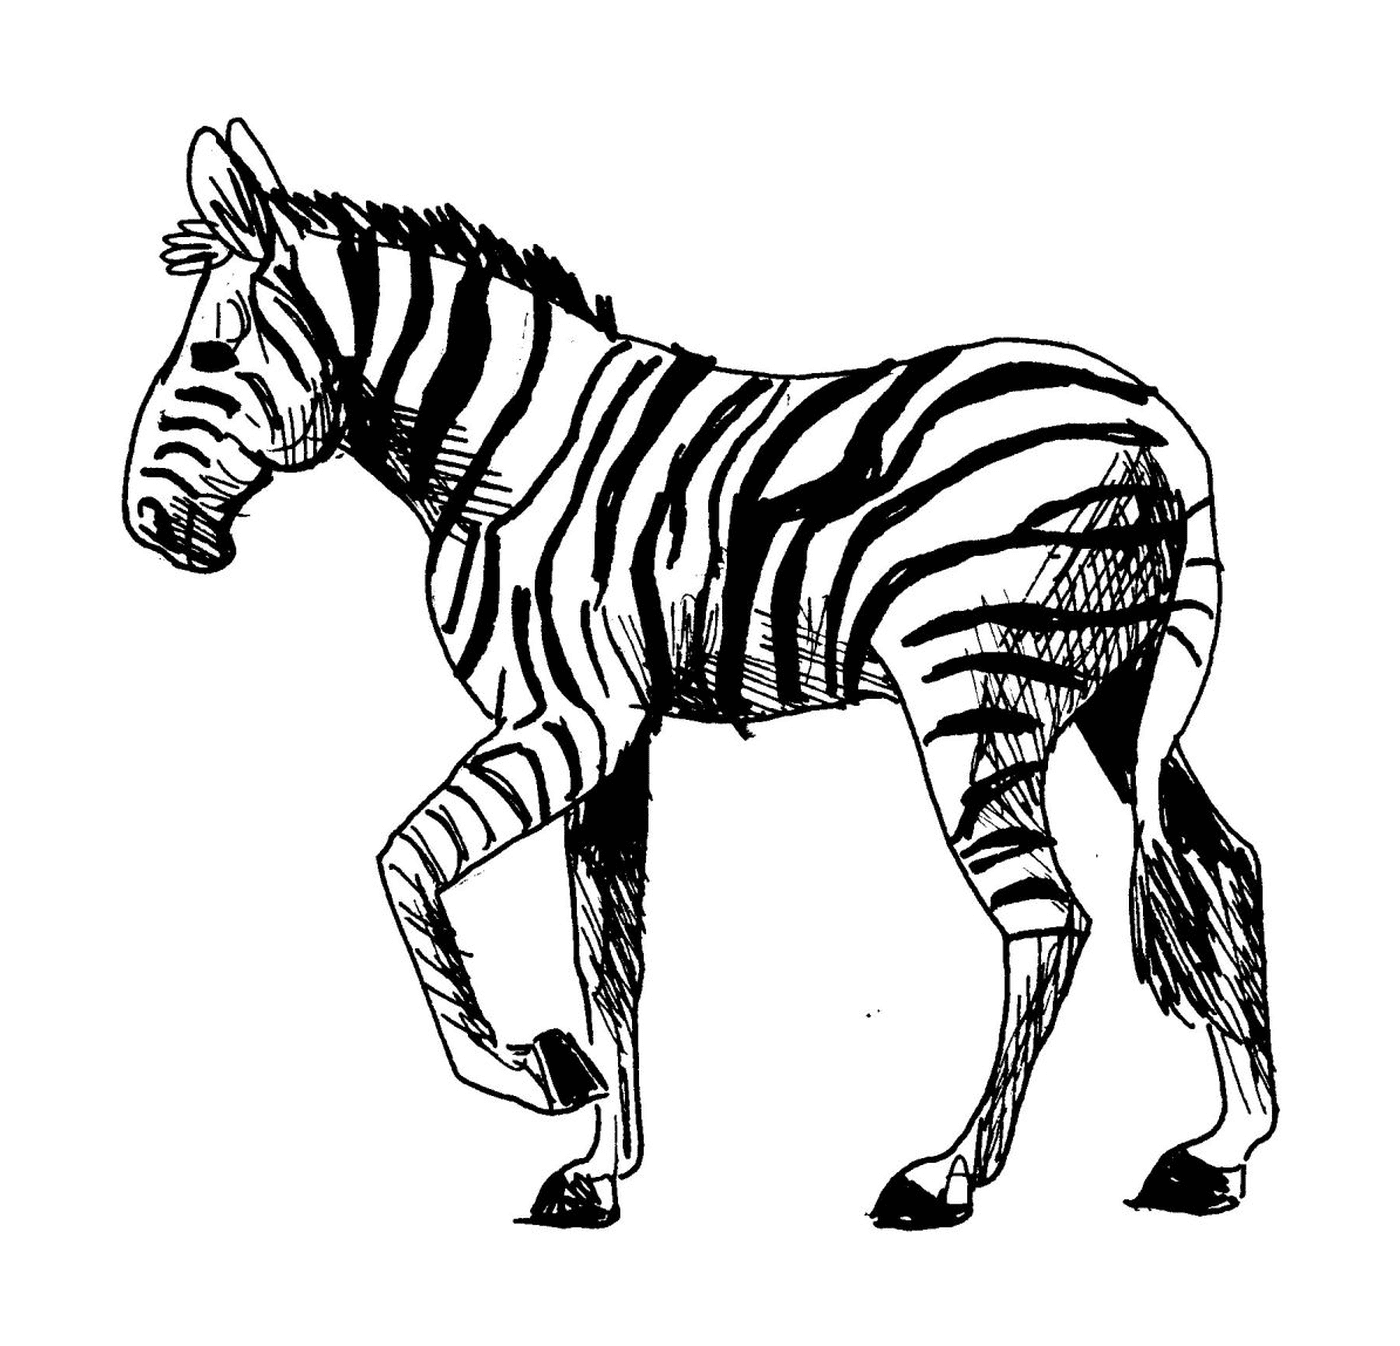  Zebra maestosa e tranquilla 